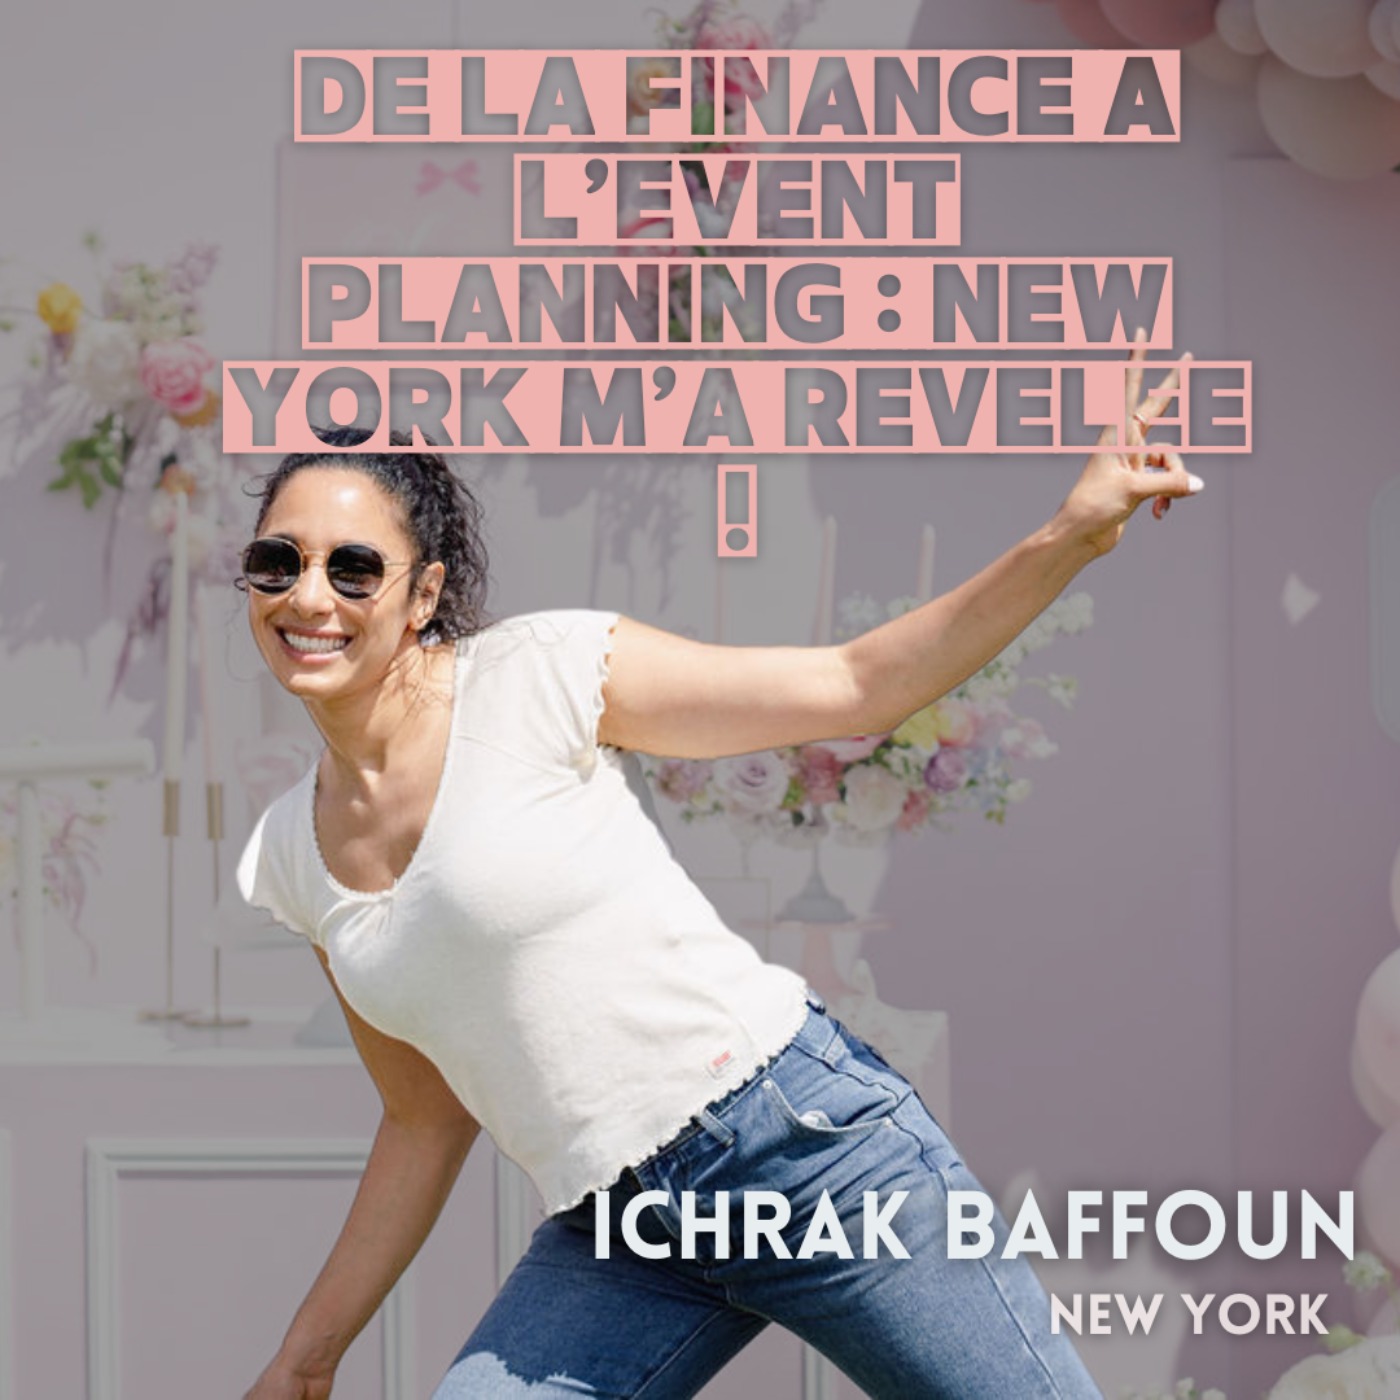 Ichrak Baffoun : de la finance à l'event planning ... New York m'a révélée !